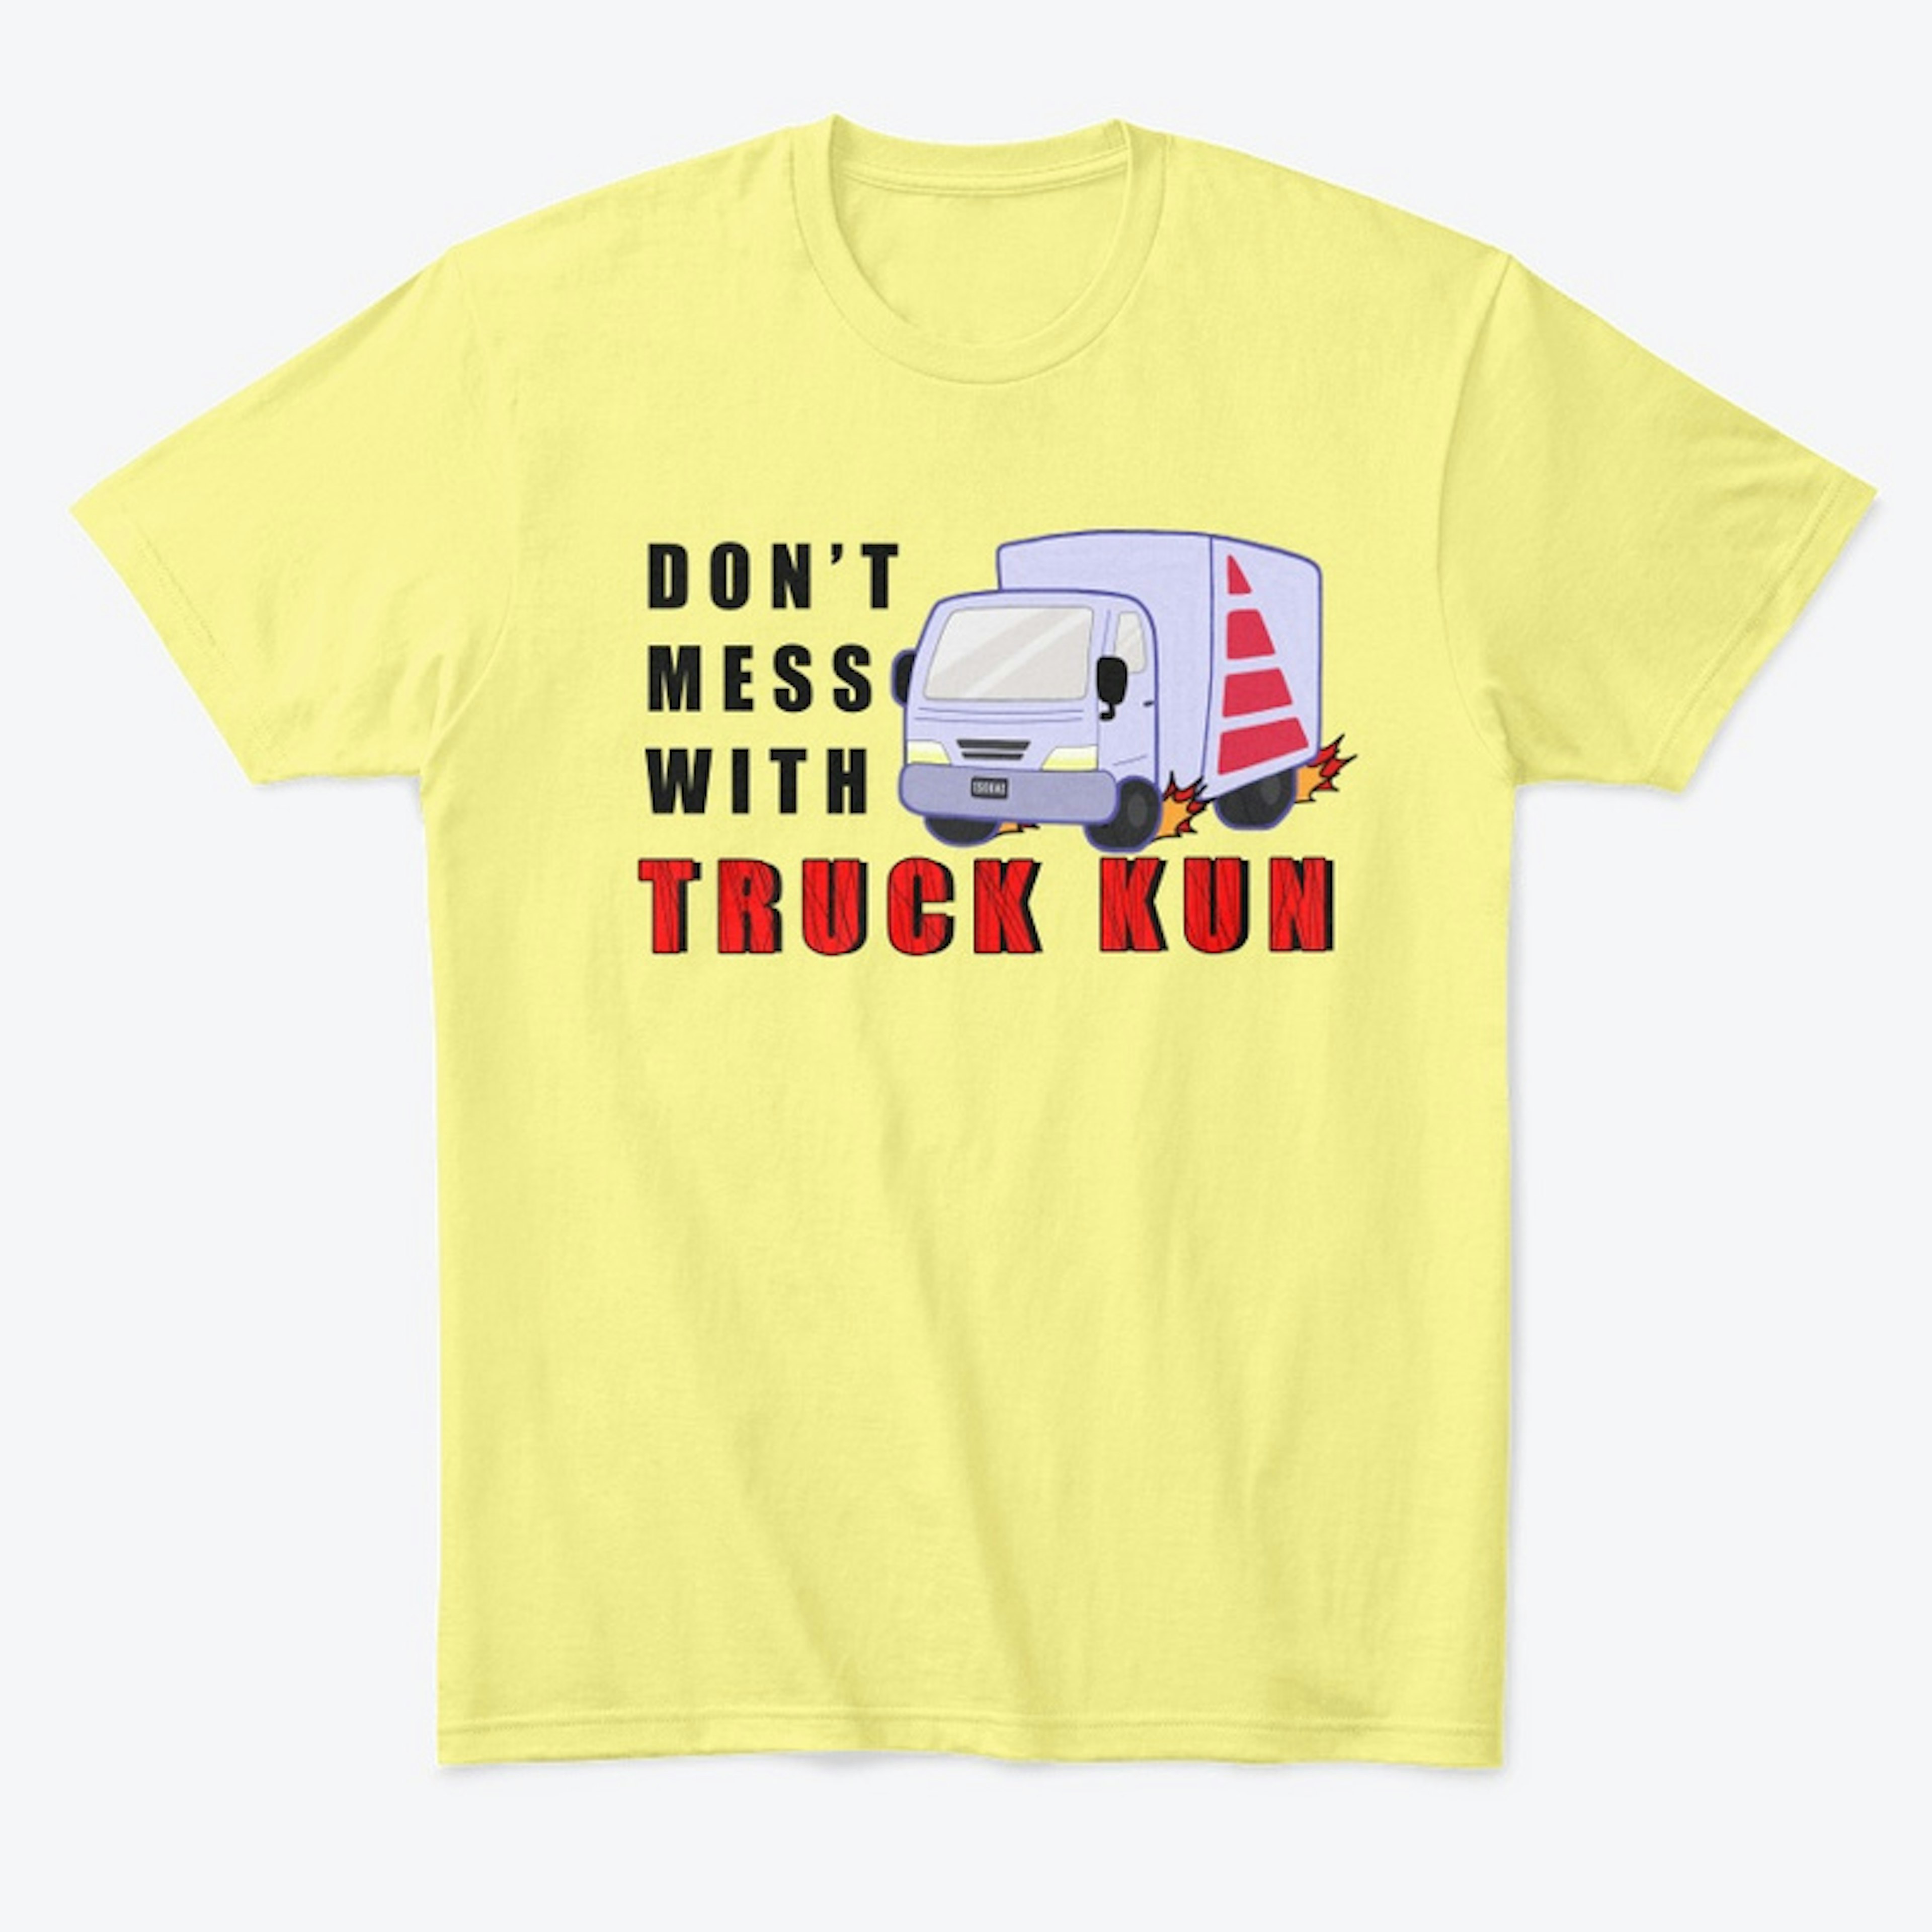 Truck-Kun